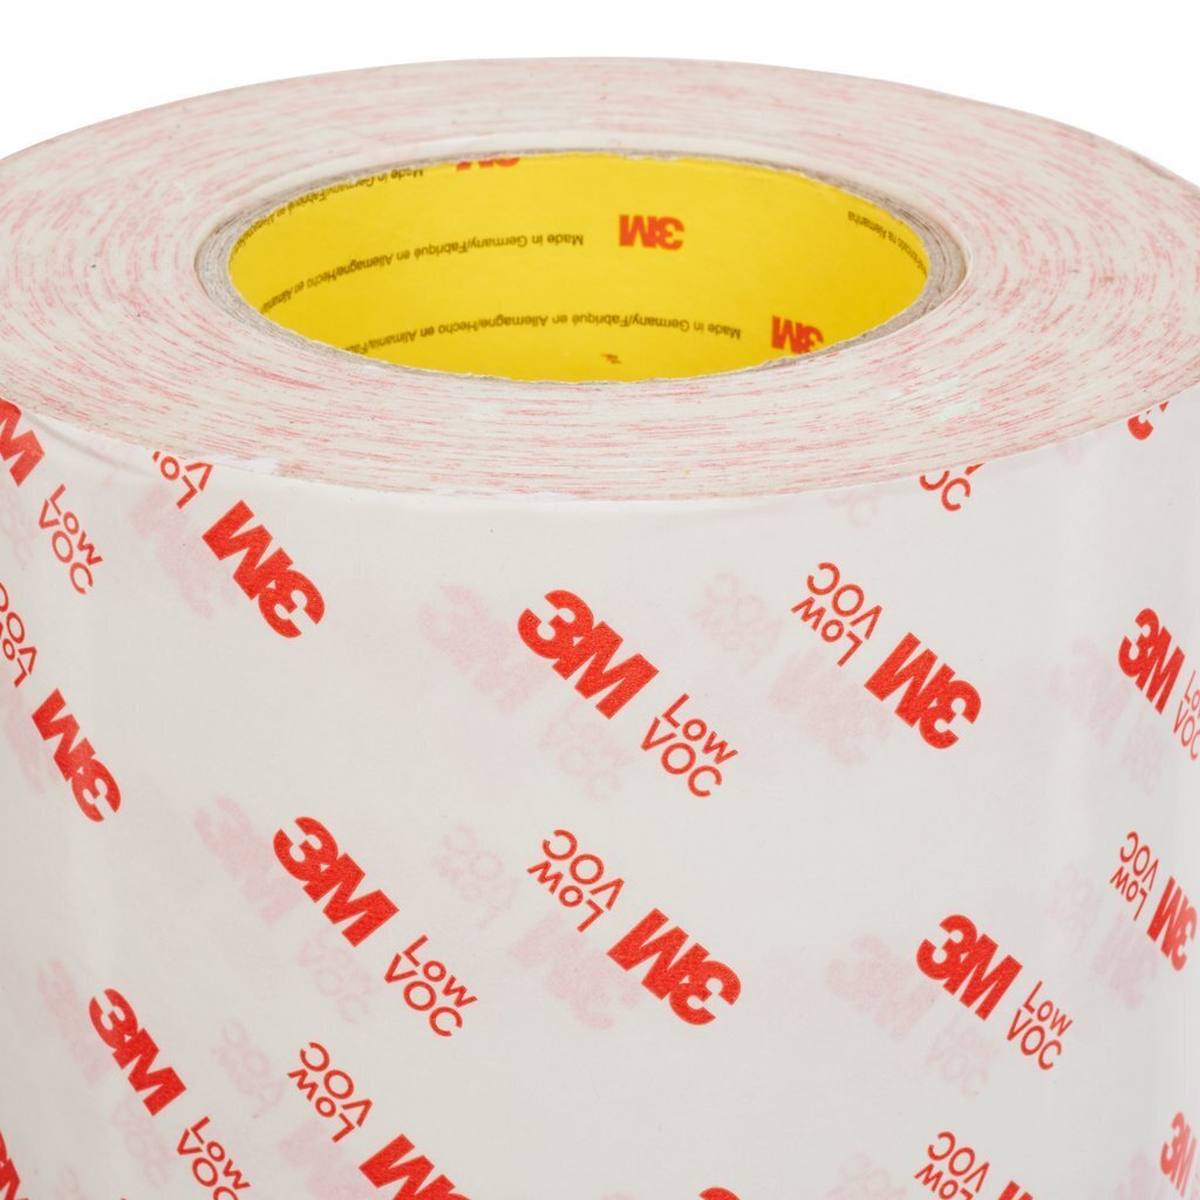 3M Dubbelzijdig plakband met vliespapier als rug 99015LVC, wit, 25 mm x 50 m, 0,15 mm